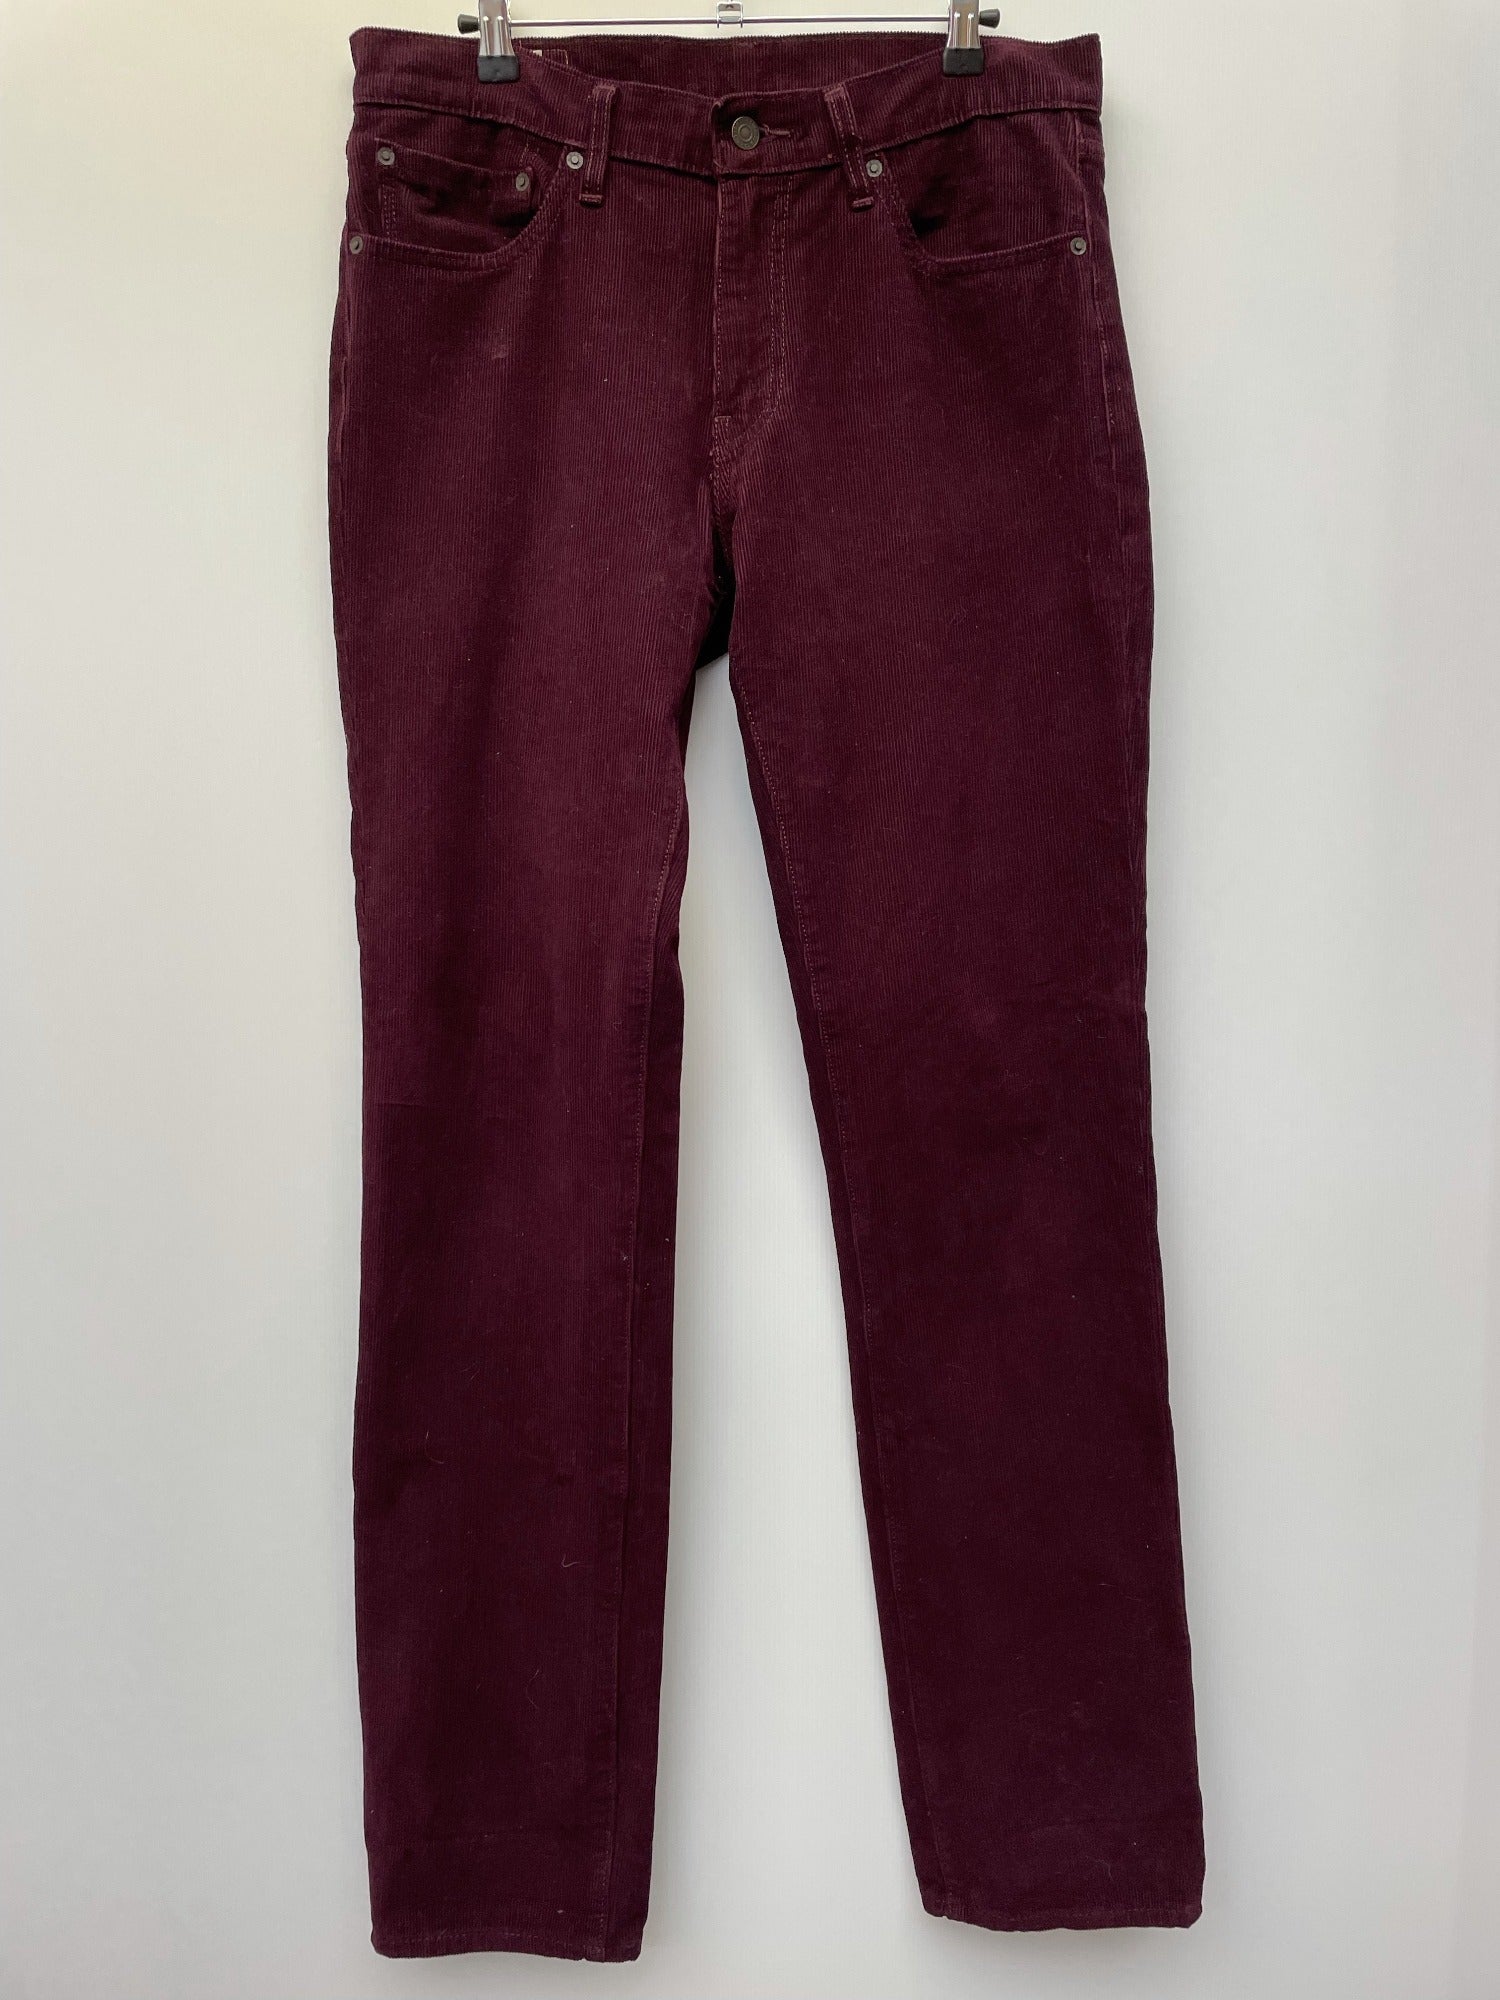 Levi Strauss Corduroy Purple Jeans - Size W33, L34 - Urban Village